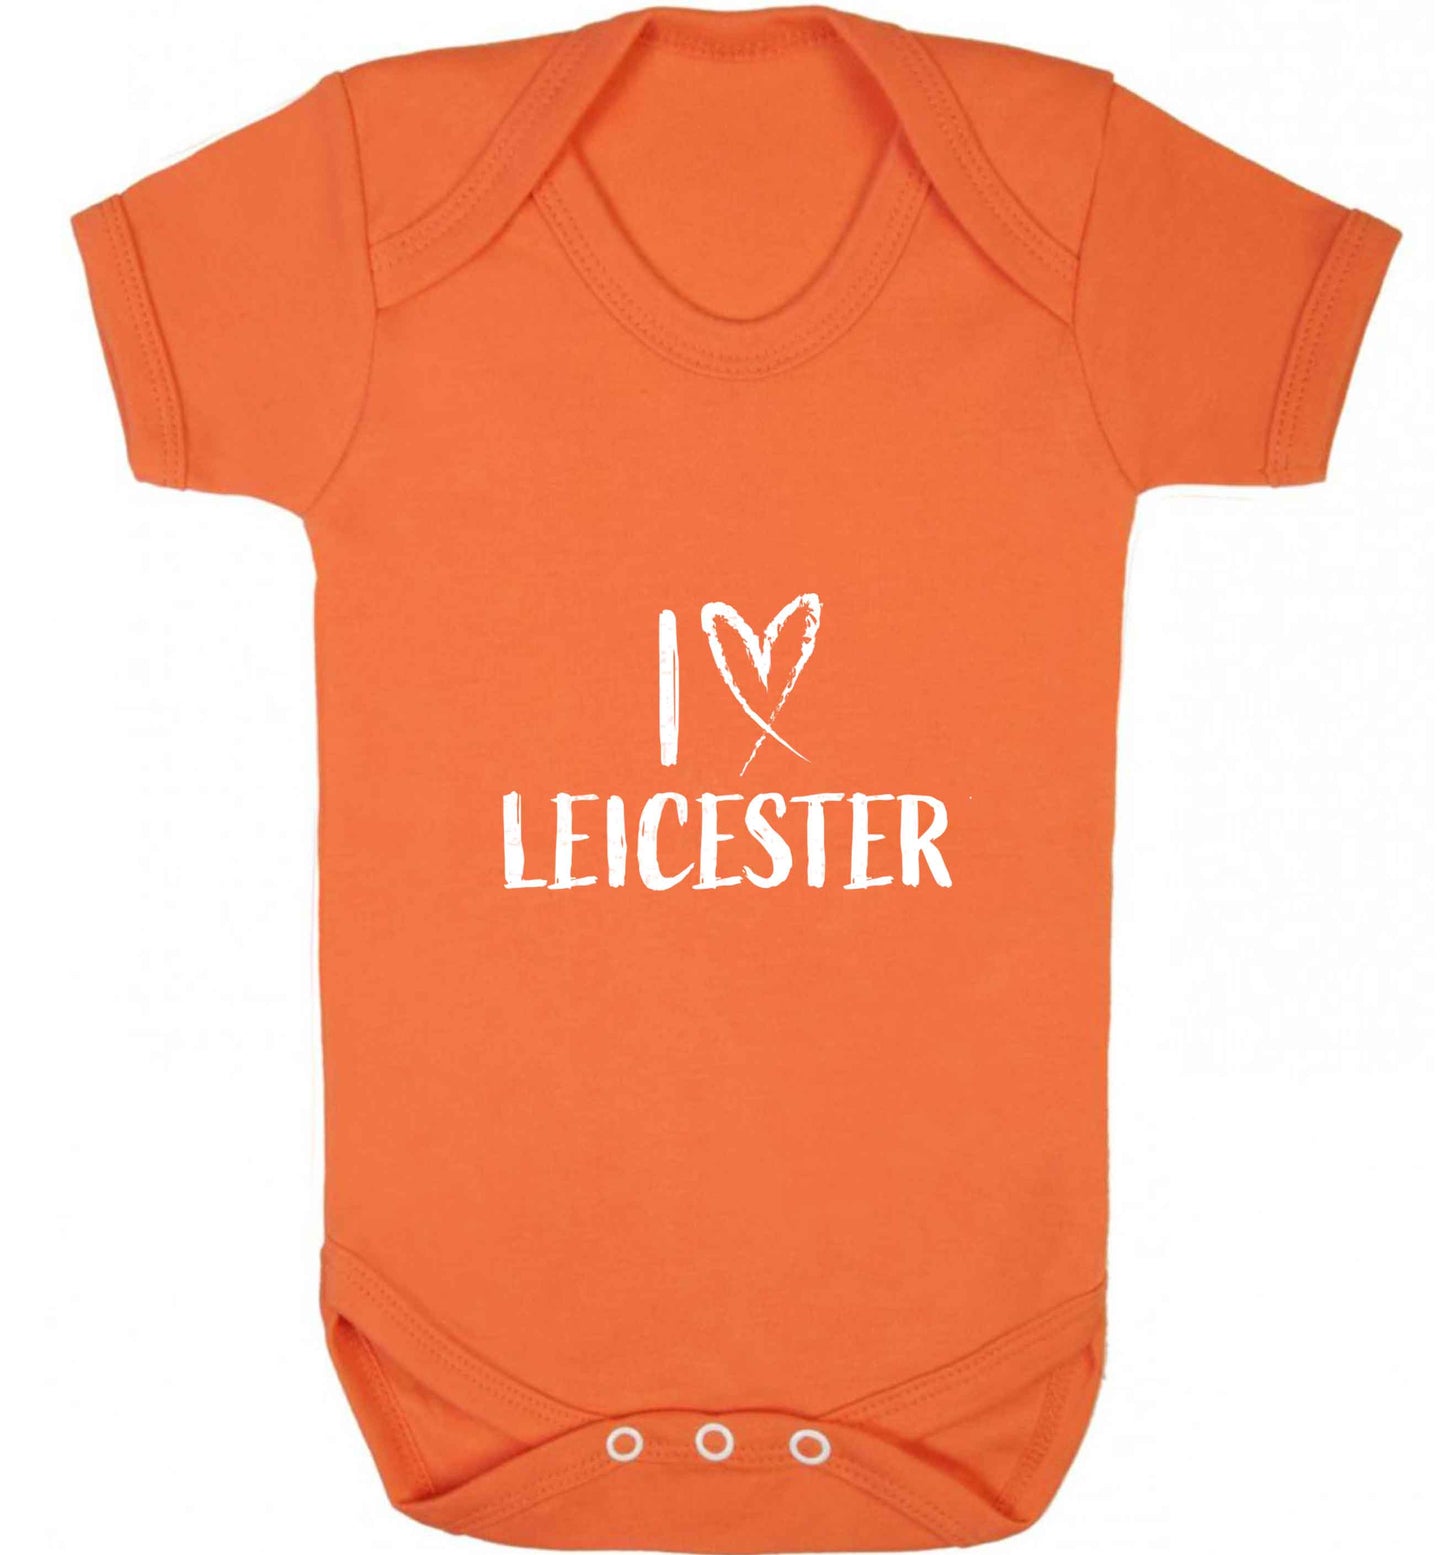 I love Leicester baby vest orange 18-24 months